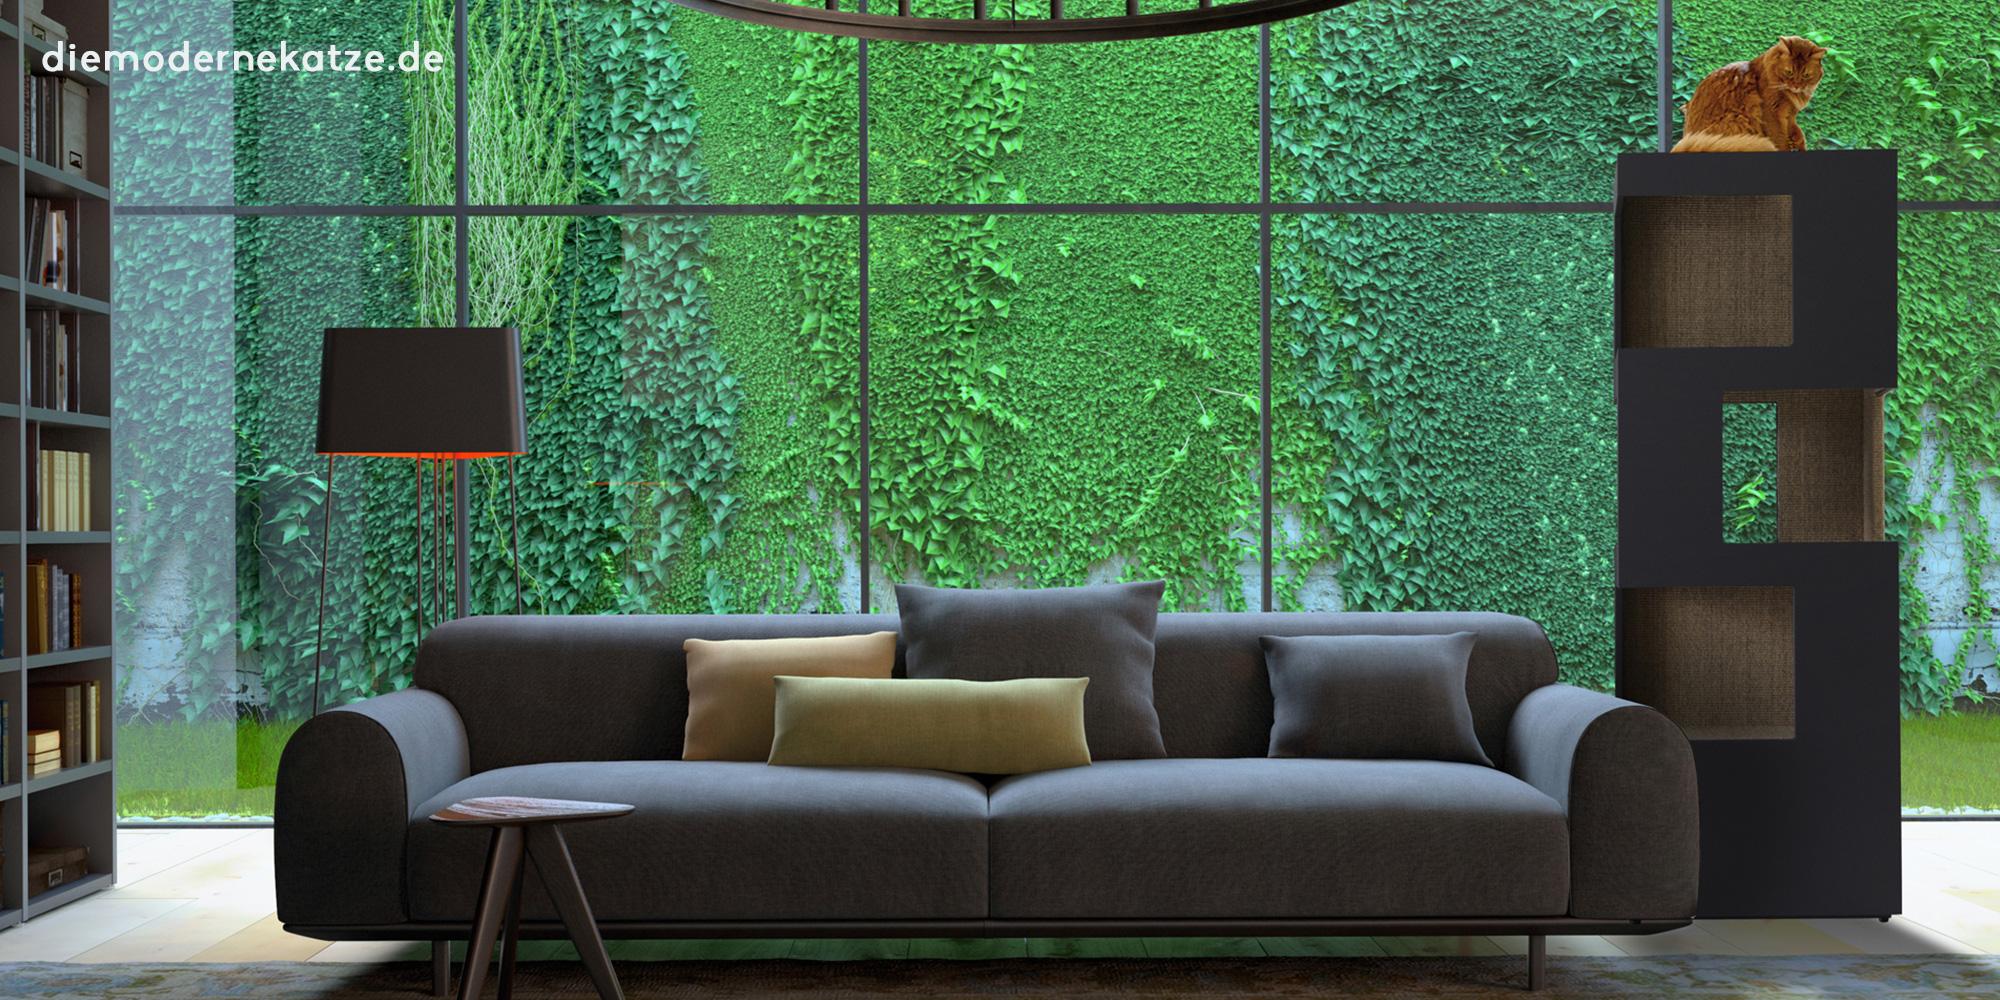 Moderner Kratzbaum in Anthrazit & Design-Sofa #designkatzenmöbel ©Katzenbaumdesign